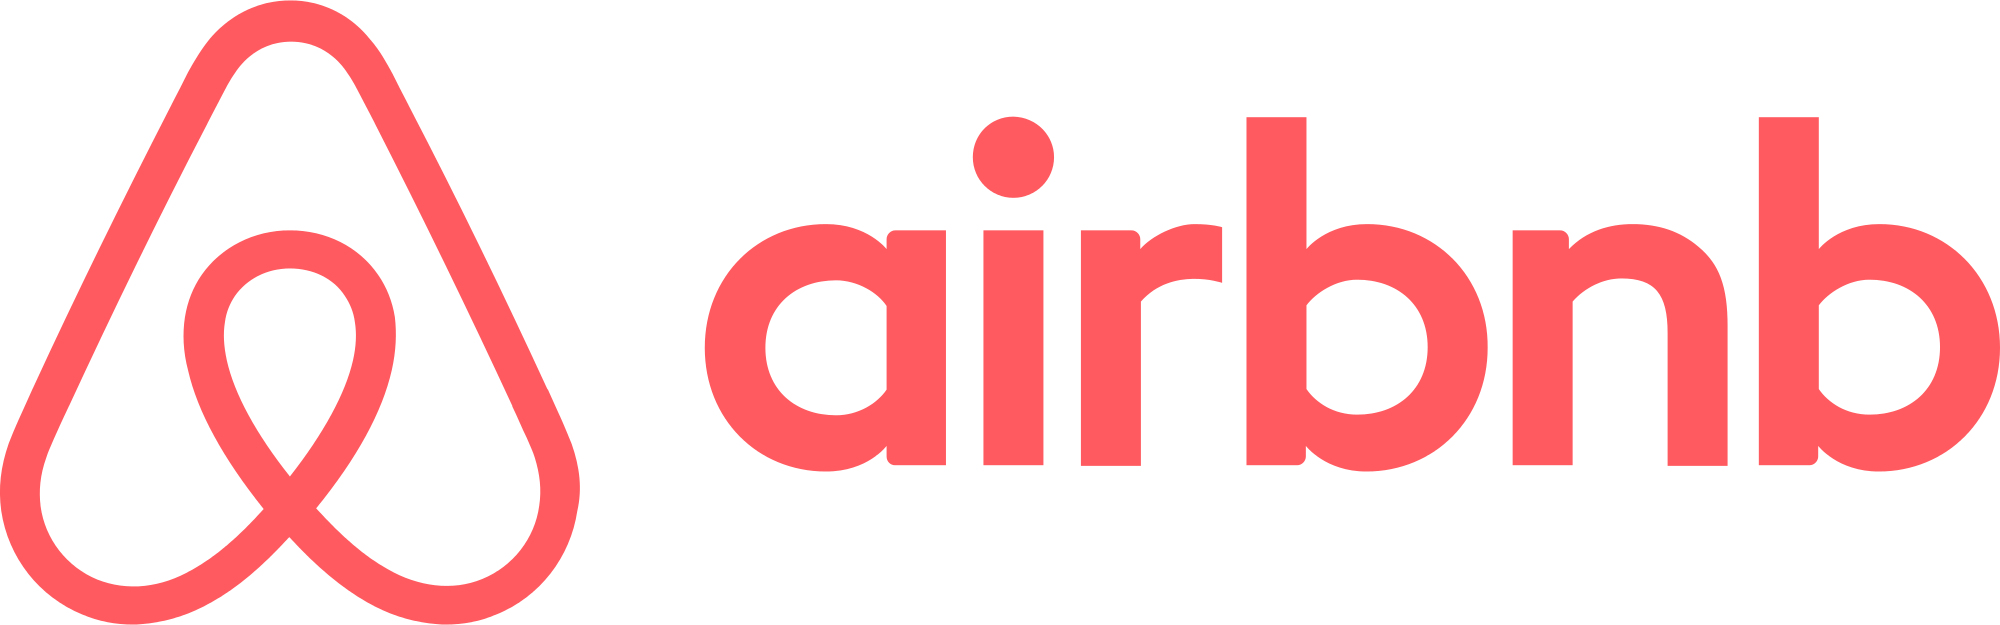 airbnb logo - IVG Properties Partner